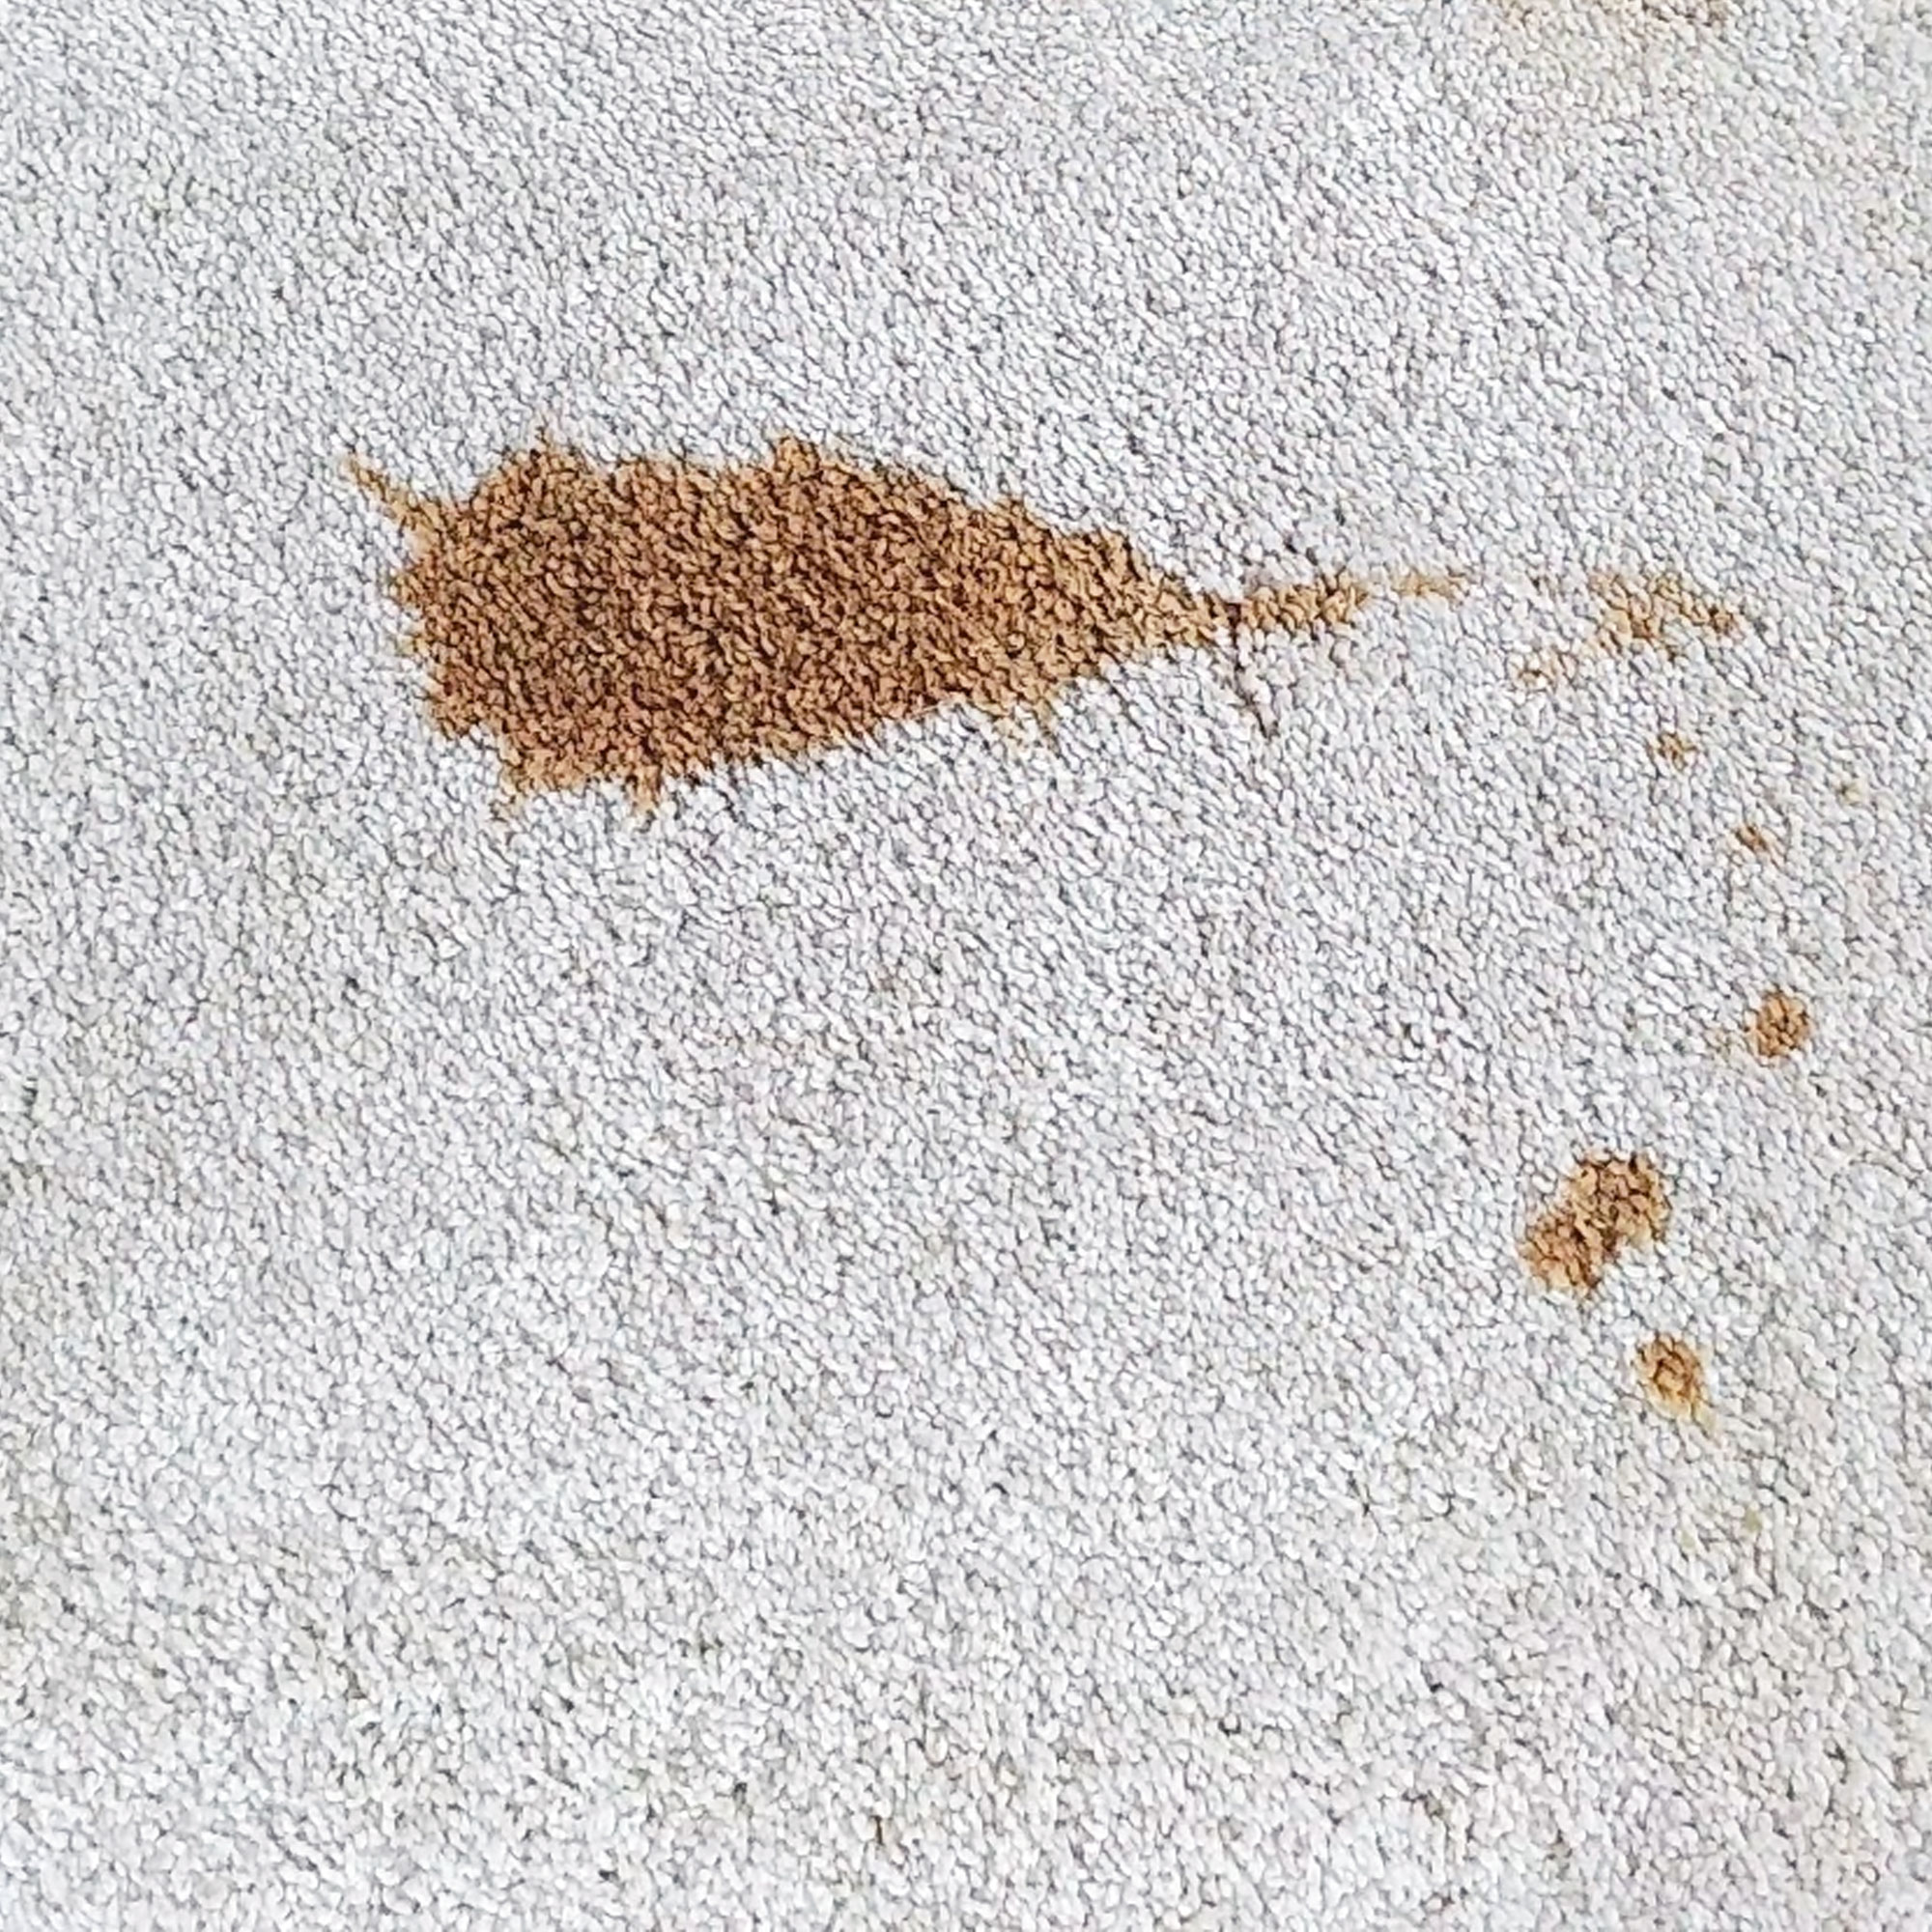 coffee spill on carpet